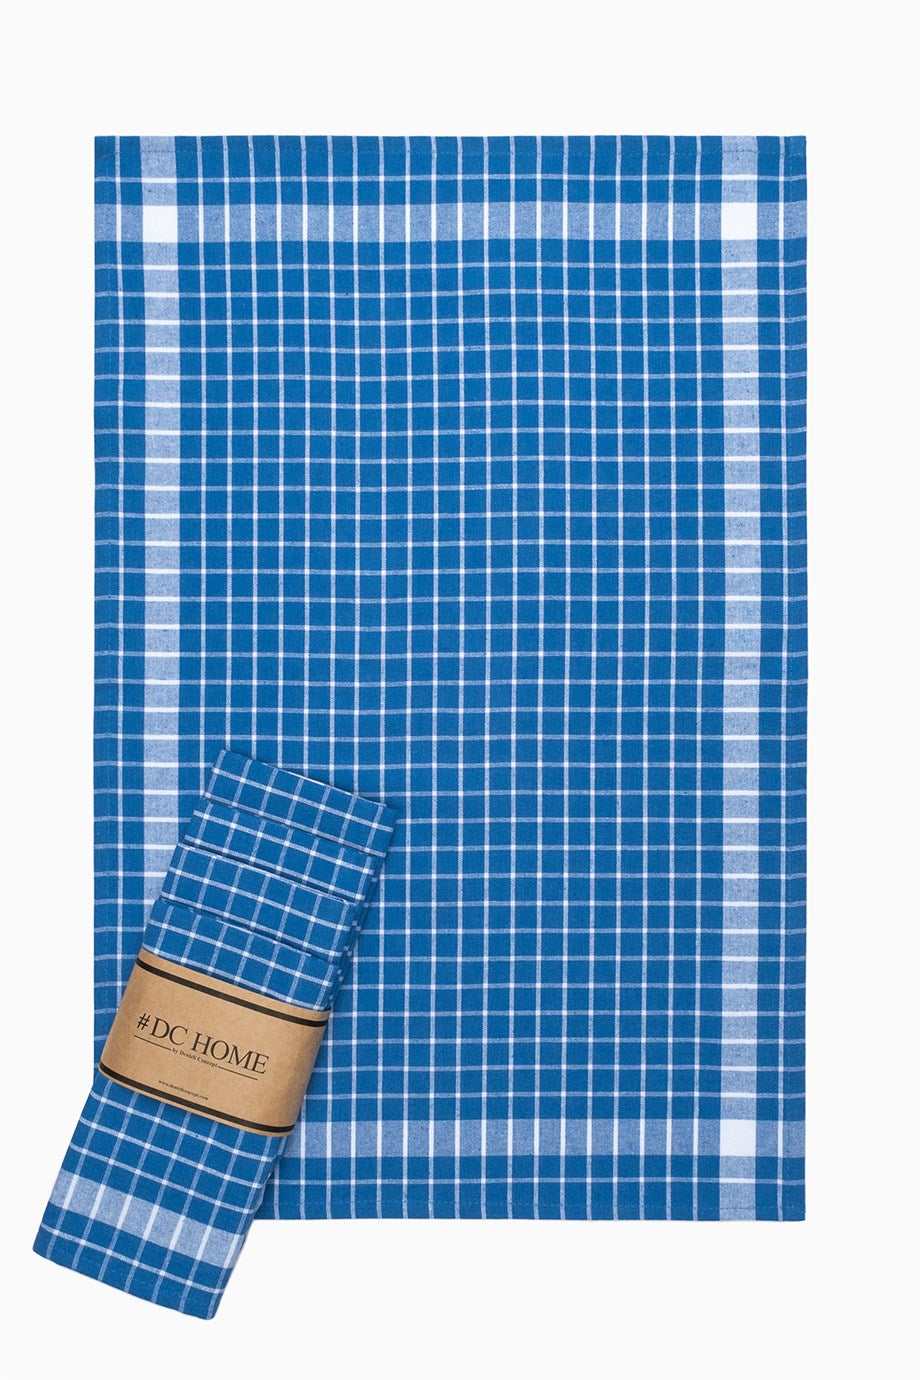 DENIZLI CONCEPT Checkered Tea Towel Blue